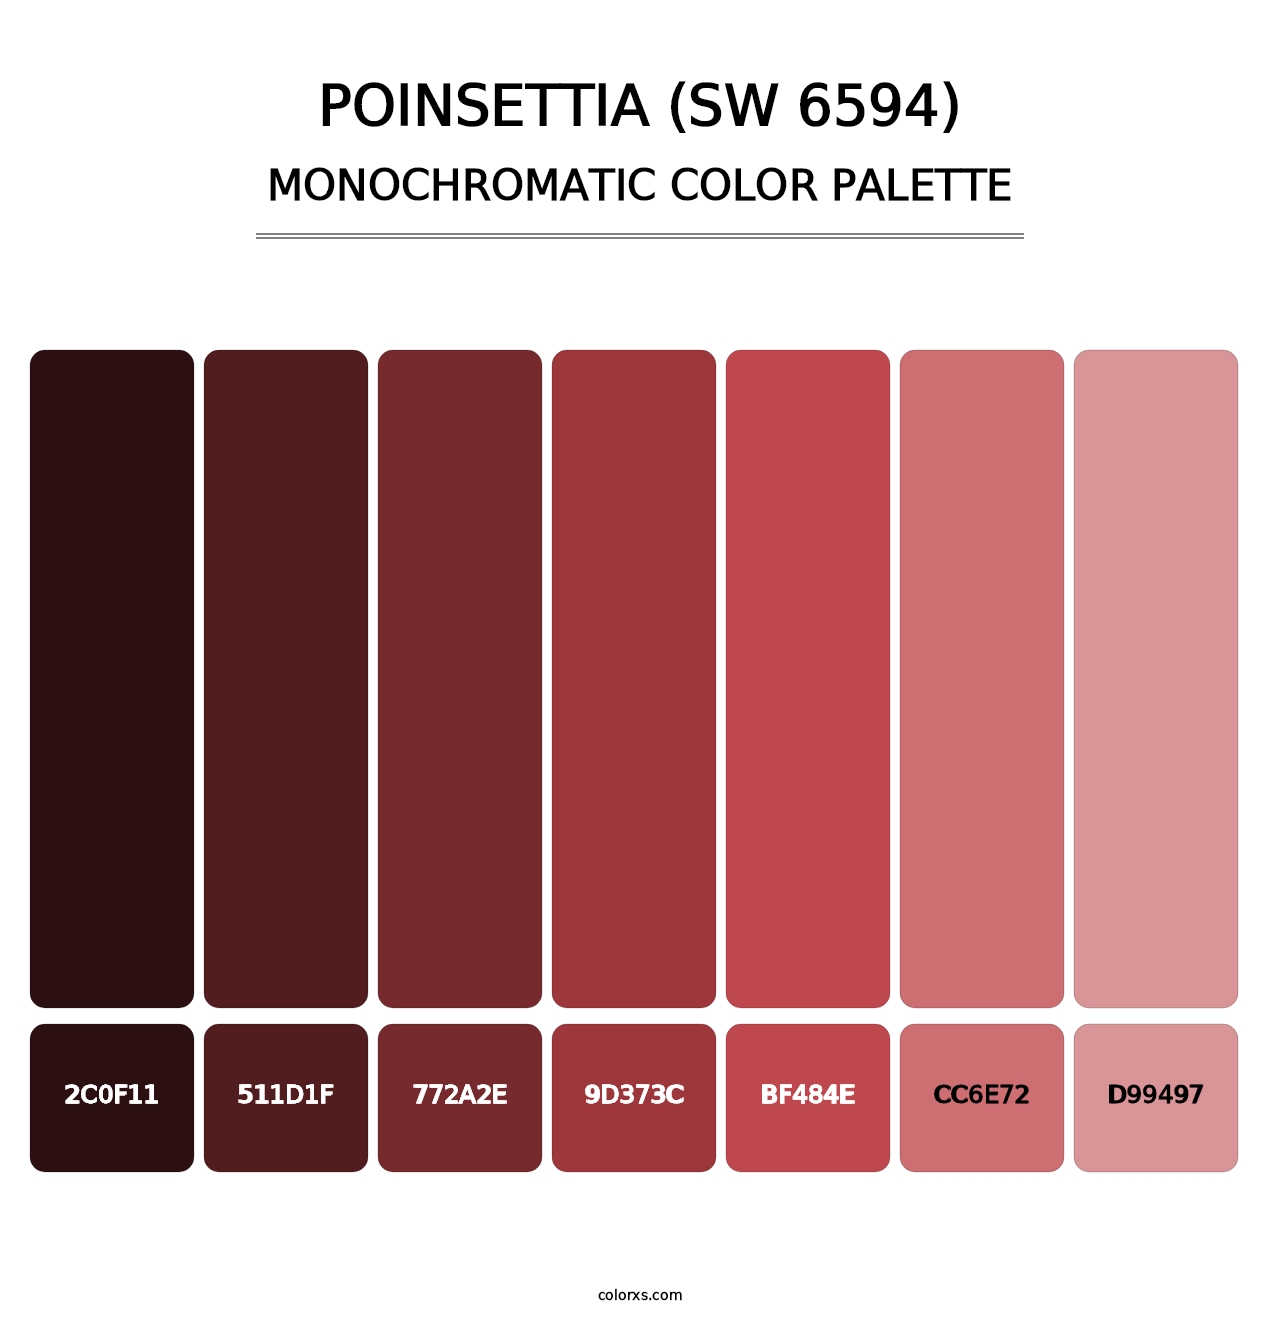 Poinsettia (SW 6594) - Monochromatic Color Palette